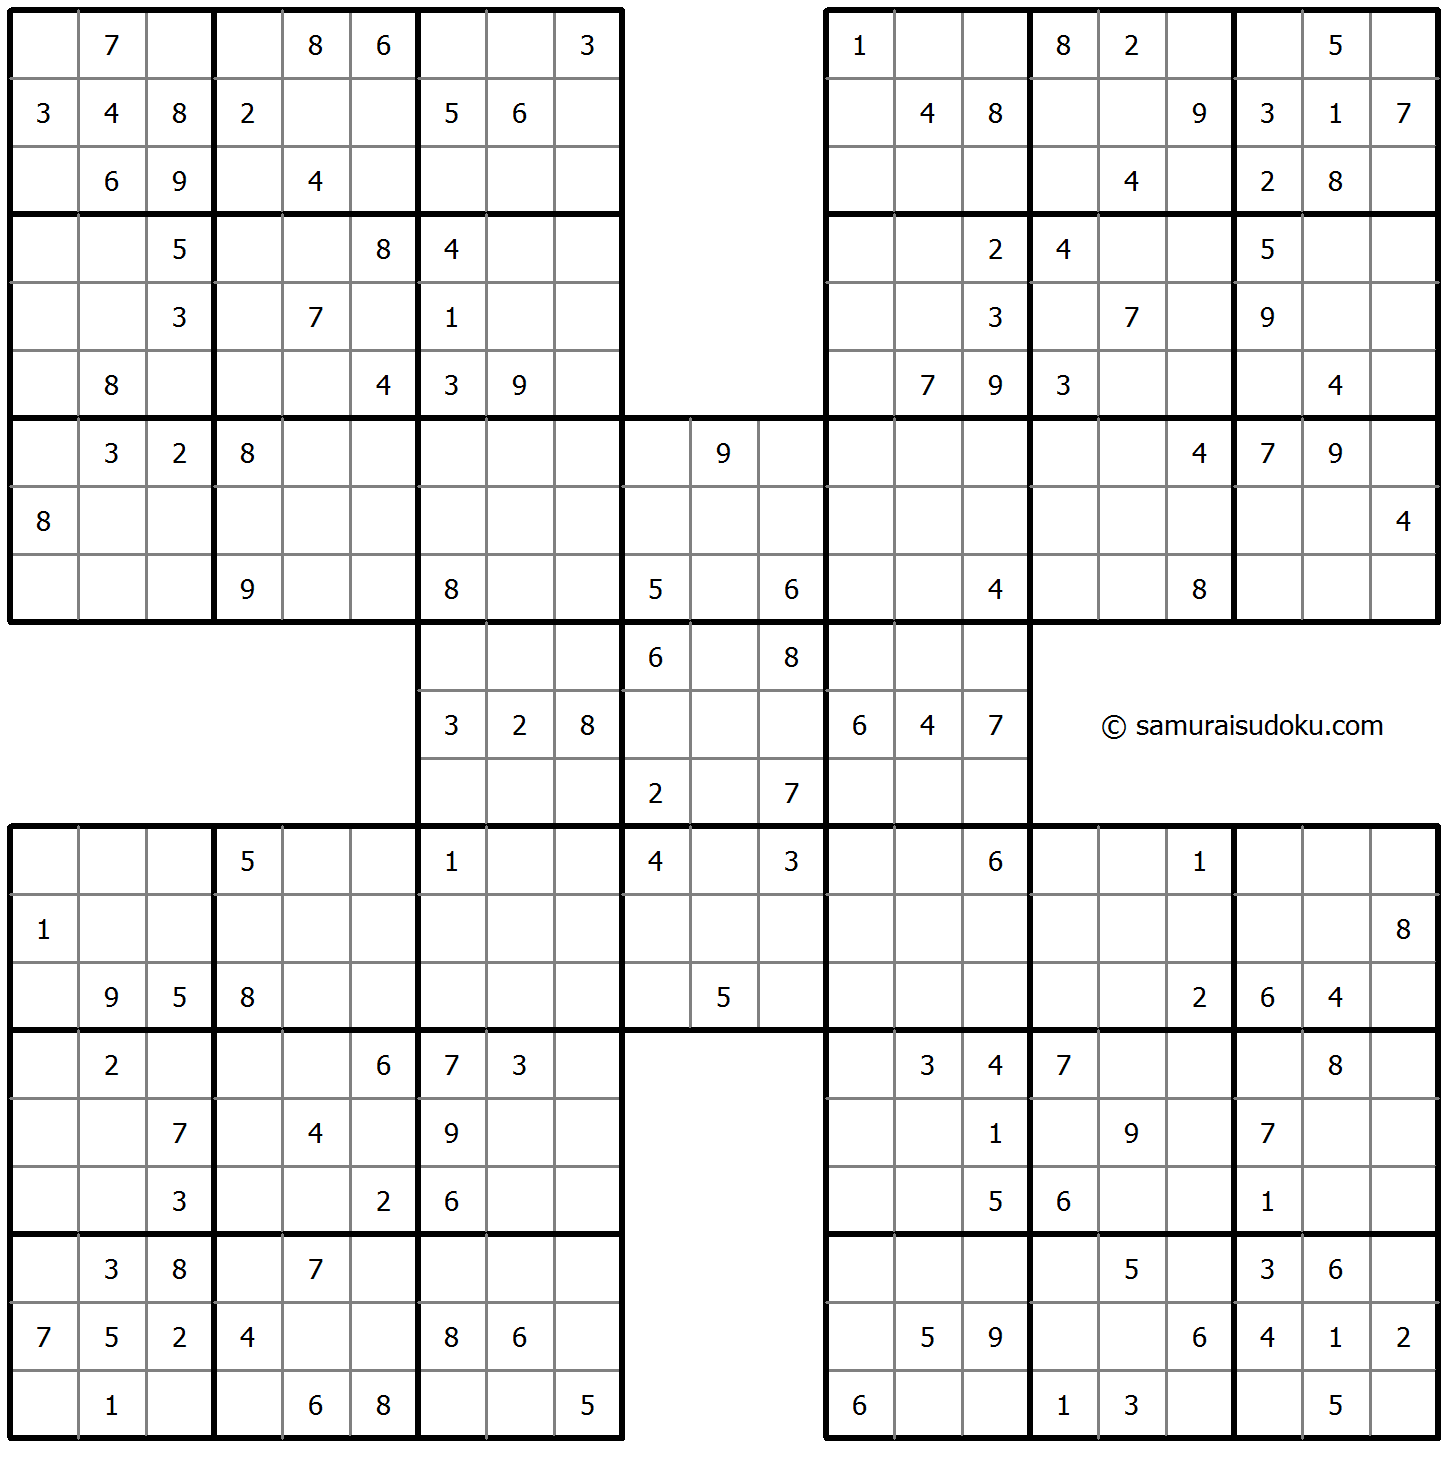 Samurai Sudoku 4-March-2022